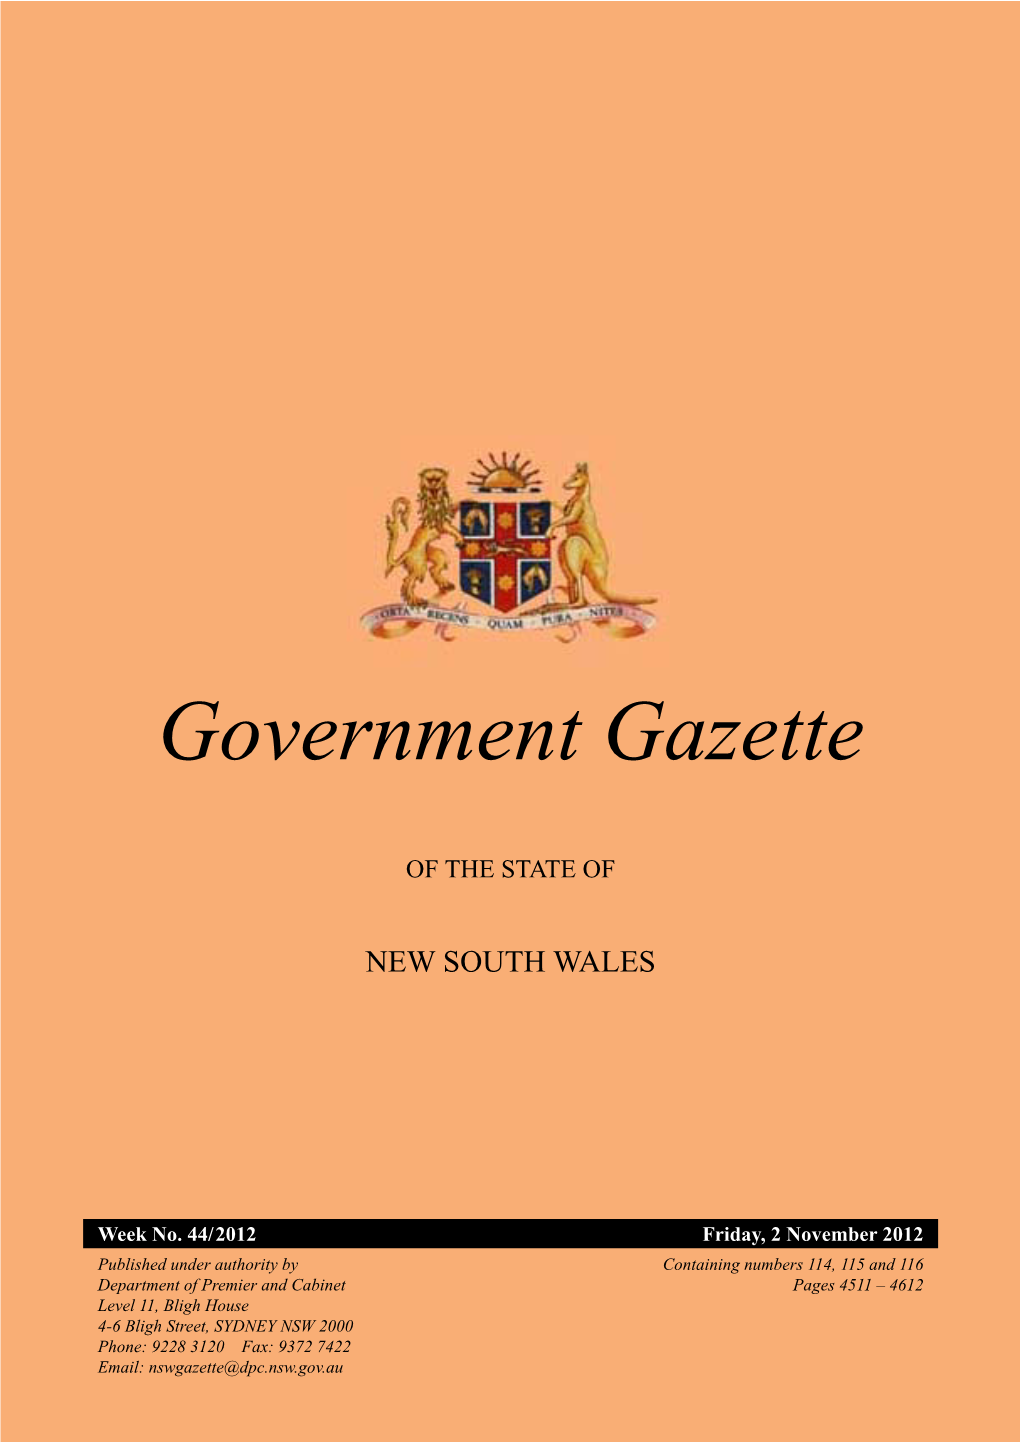 Government Gazette of 2 November 2012